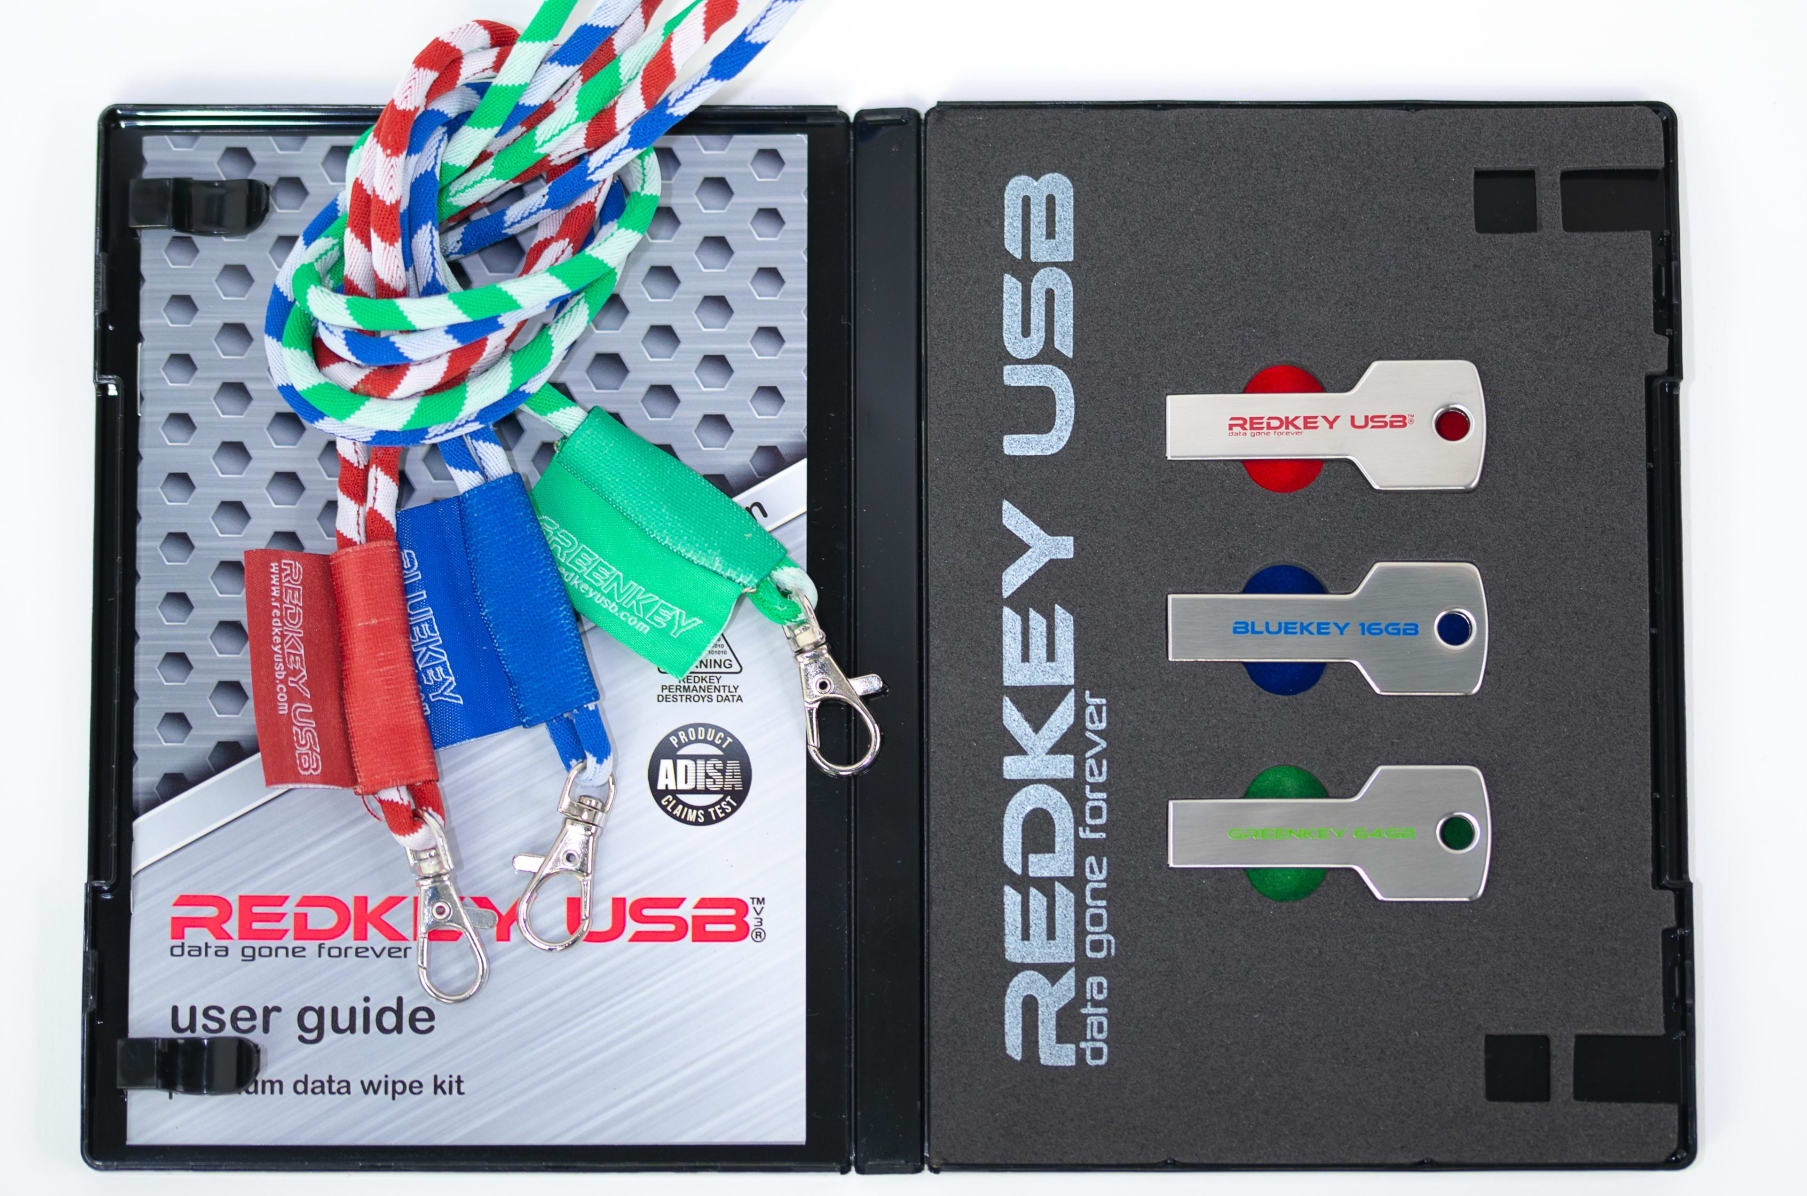 USB Key - USB Keys - DN-USBKEY - Bipensiero Italy